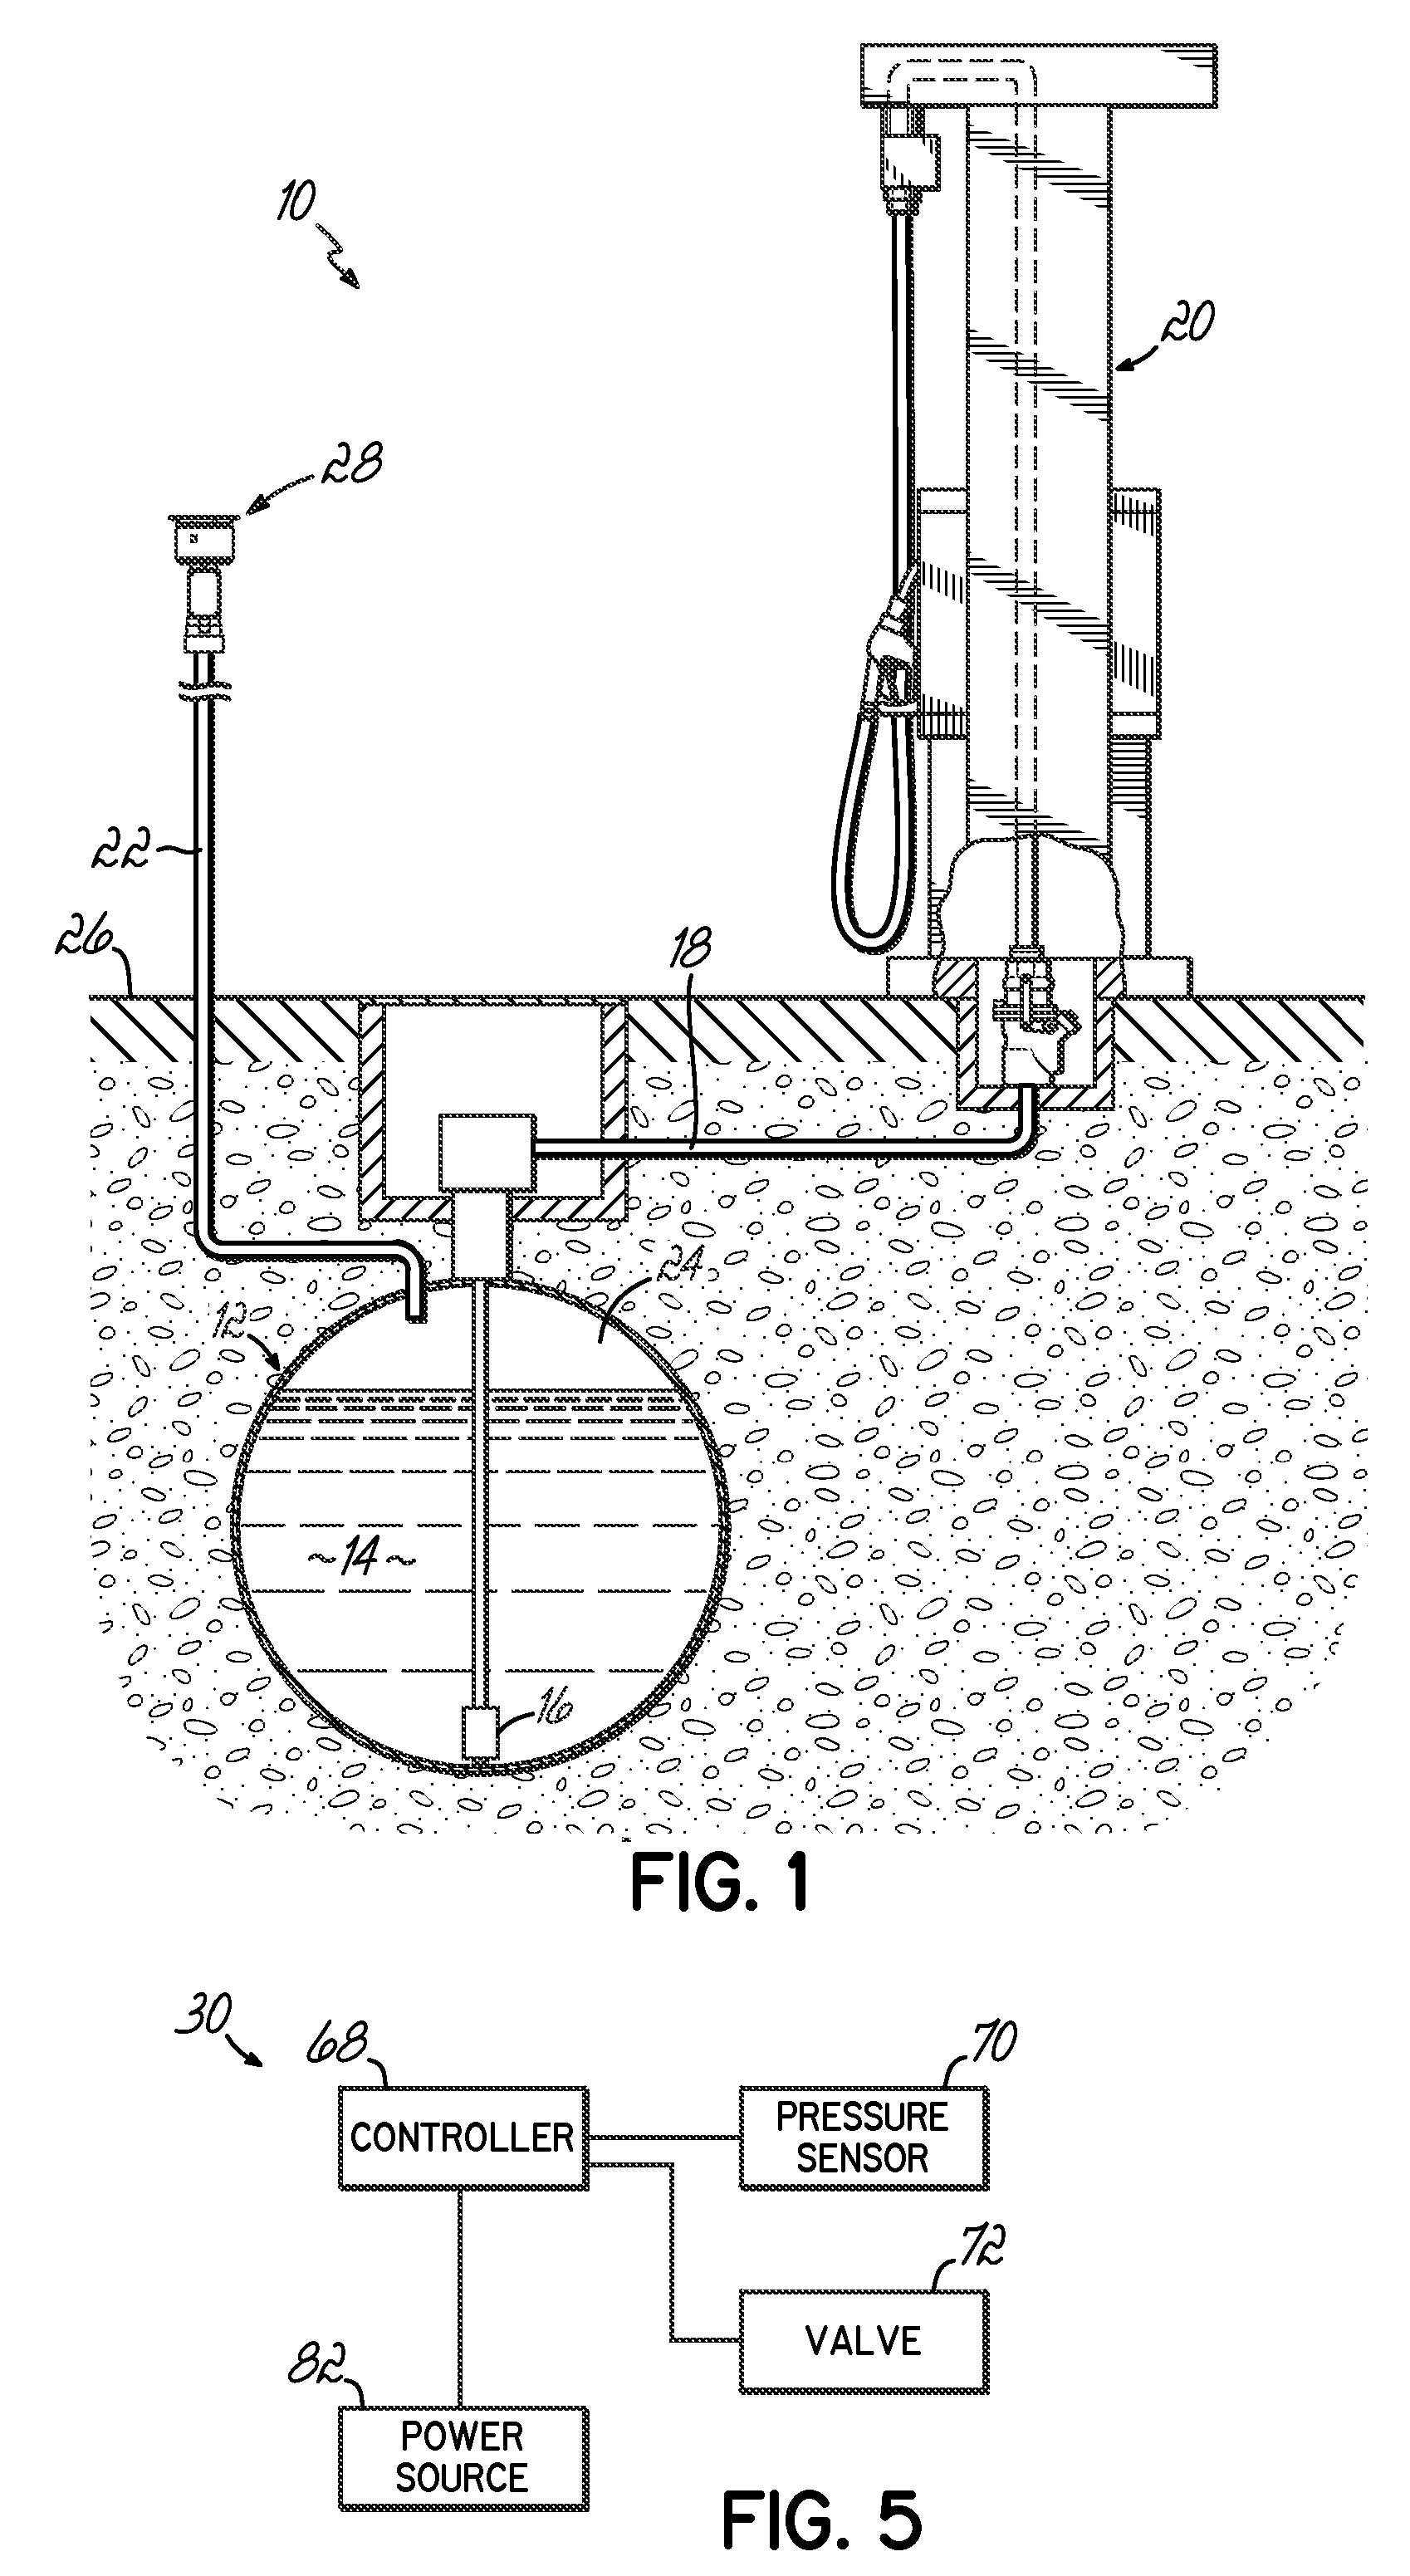 Underground fuel tank vent valve